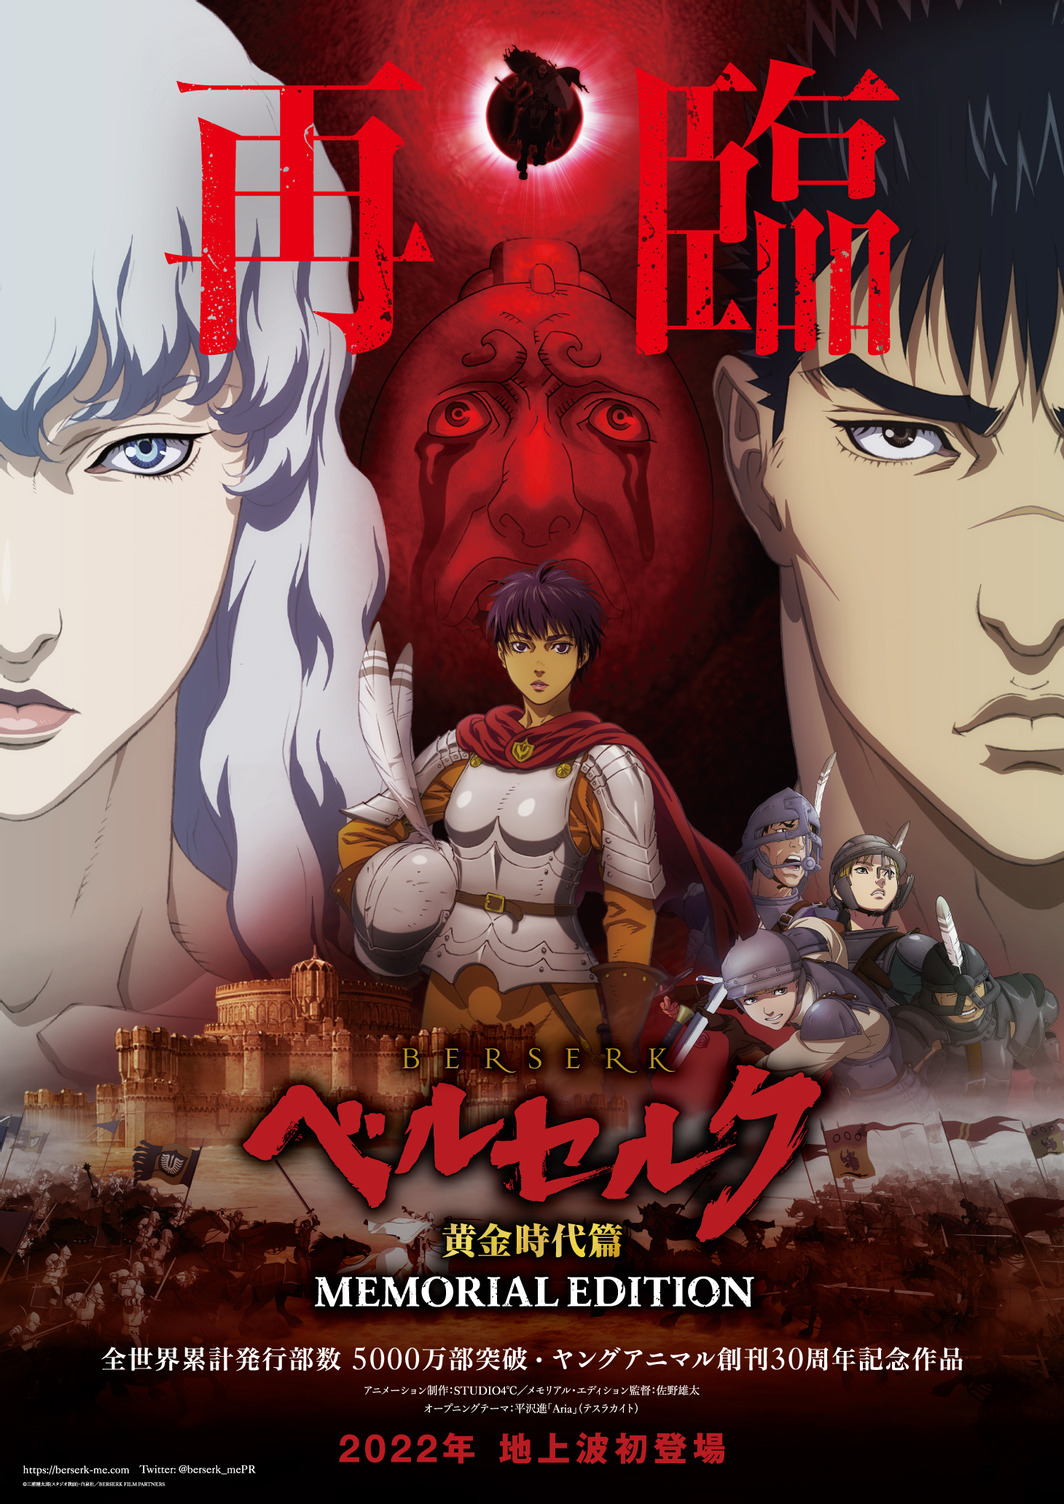 Berserk: The Golden Age Arc - Memorial Edition anime key visual